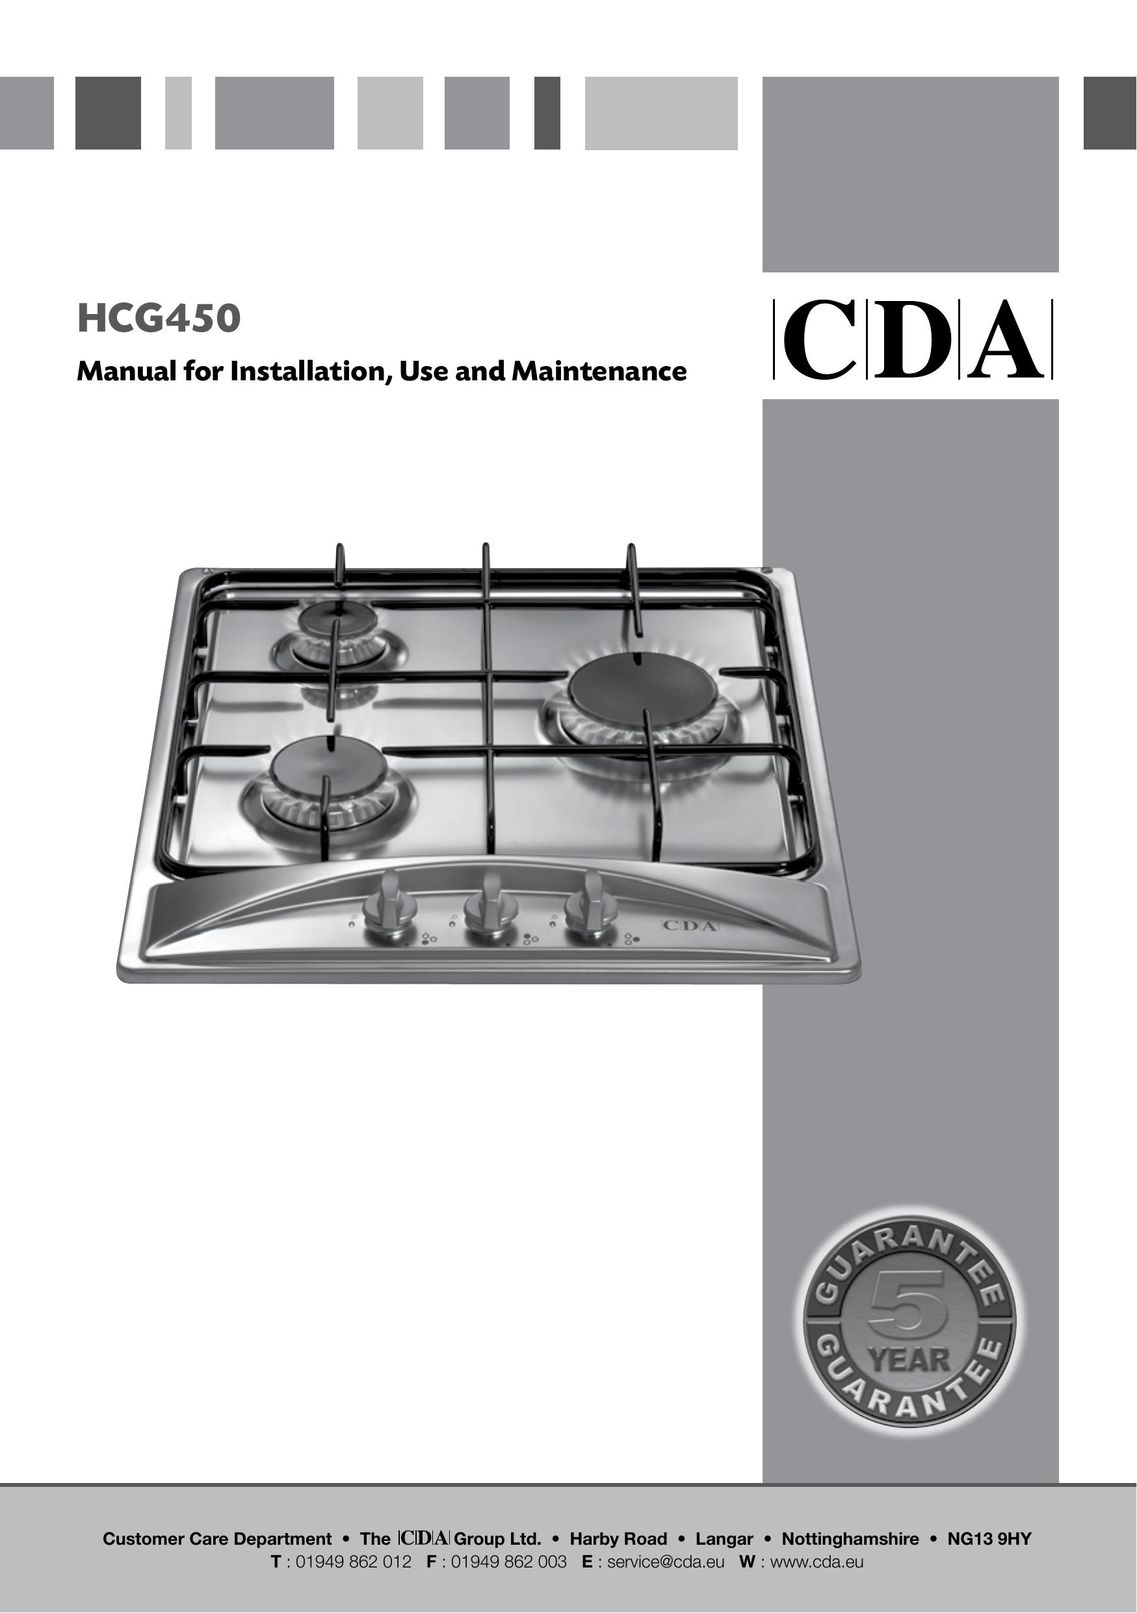 CDA HCG450 Stove User Manual